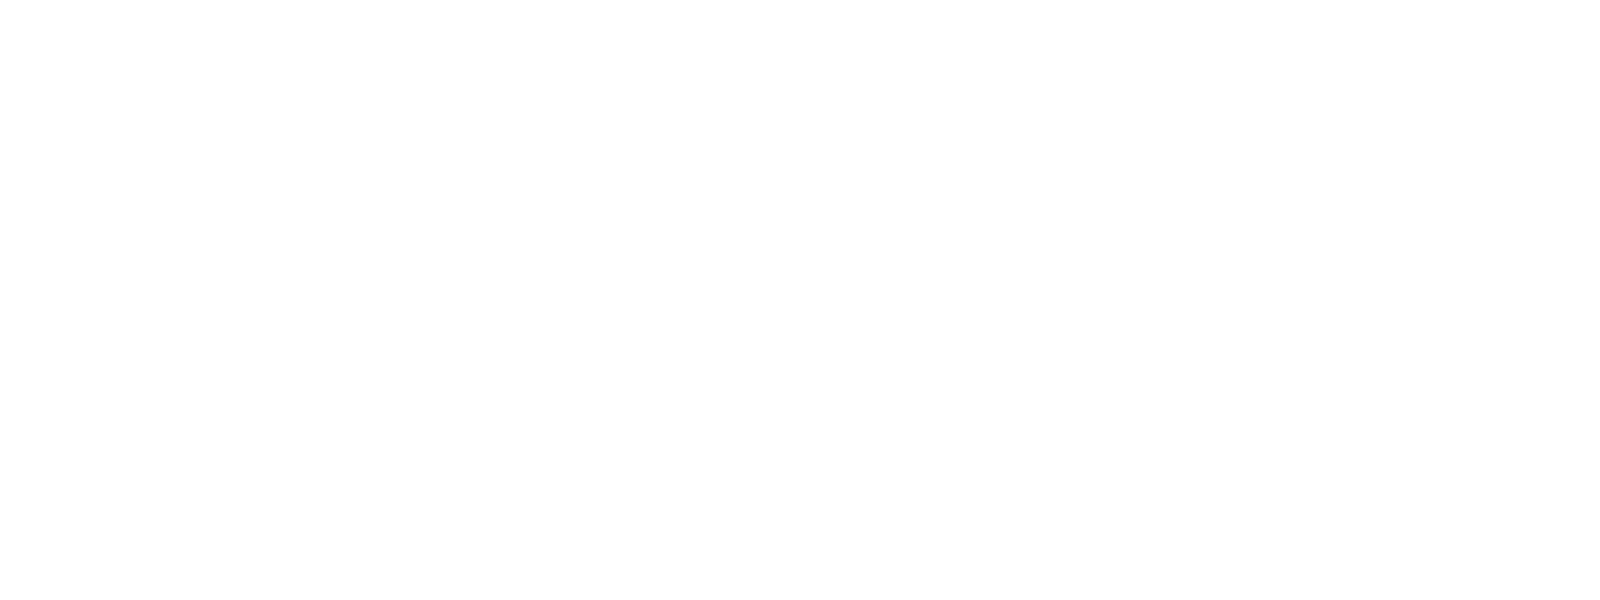 digital missions display logo white banner image